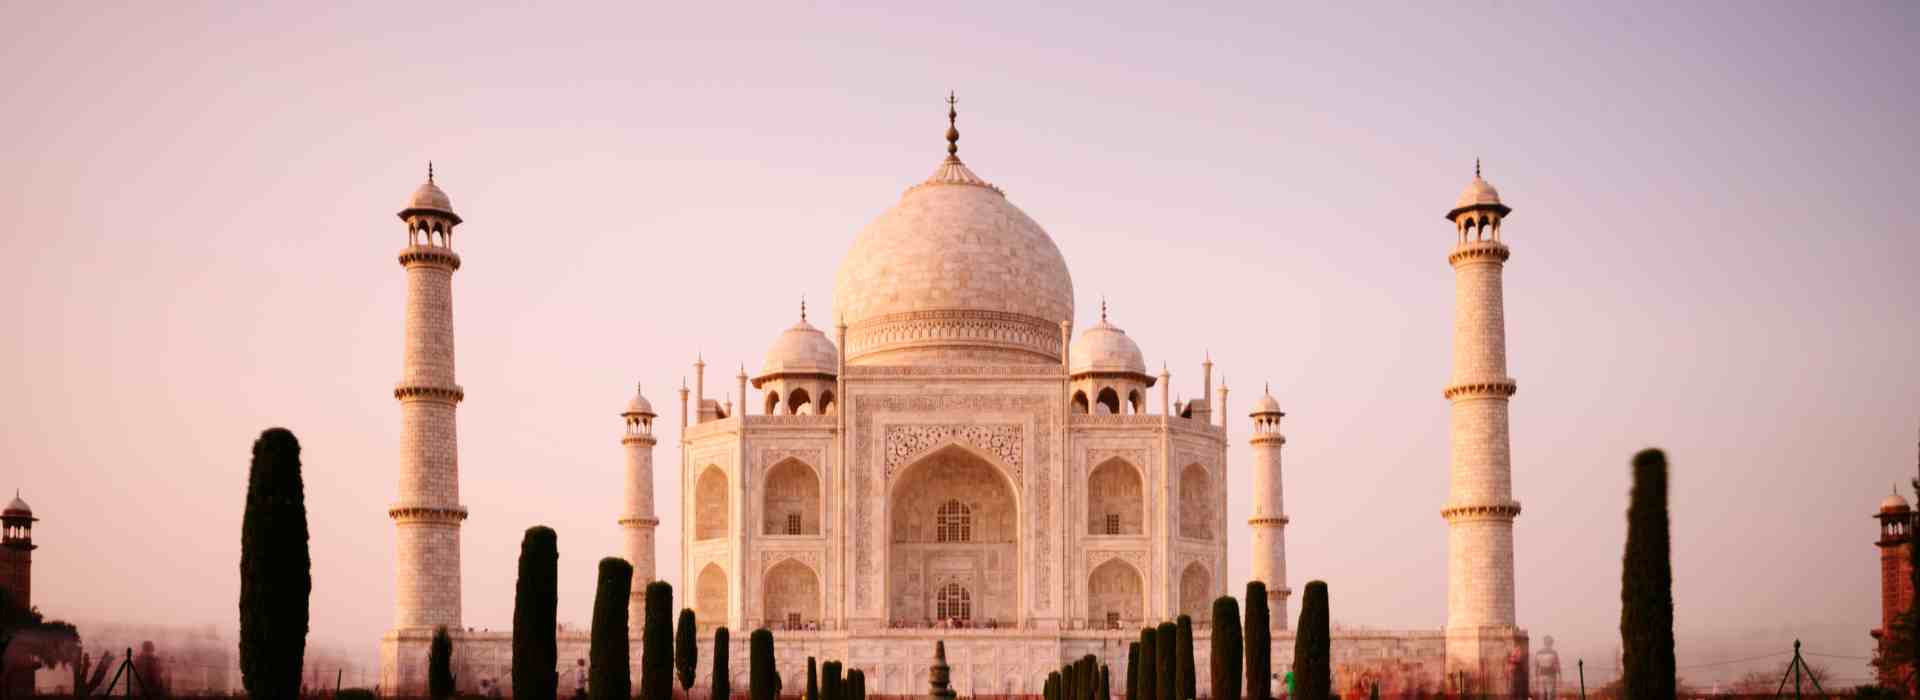 Taj Mahal Tour by Train from Delhi